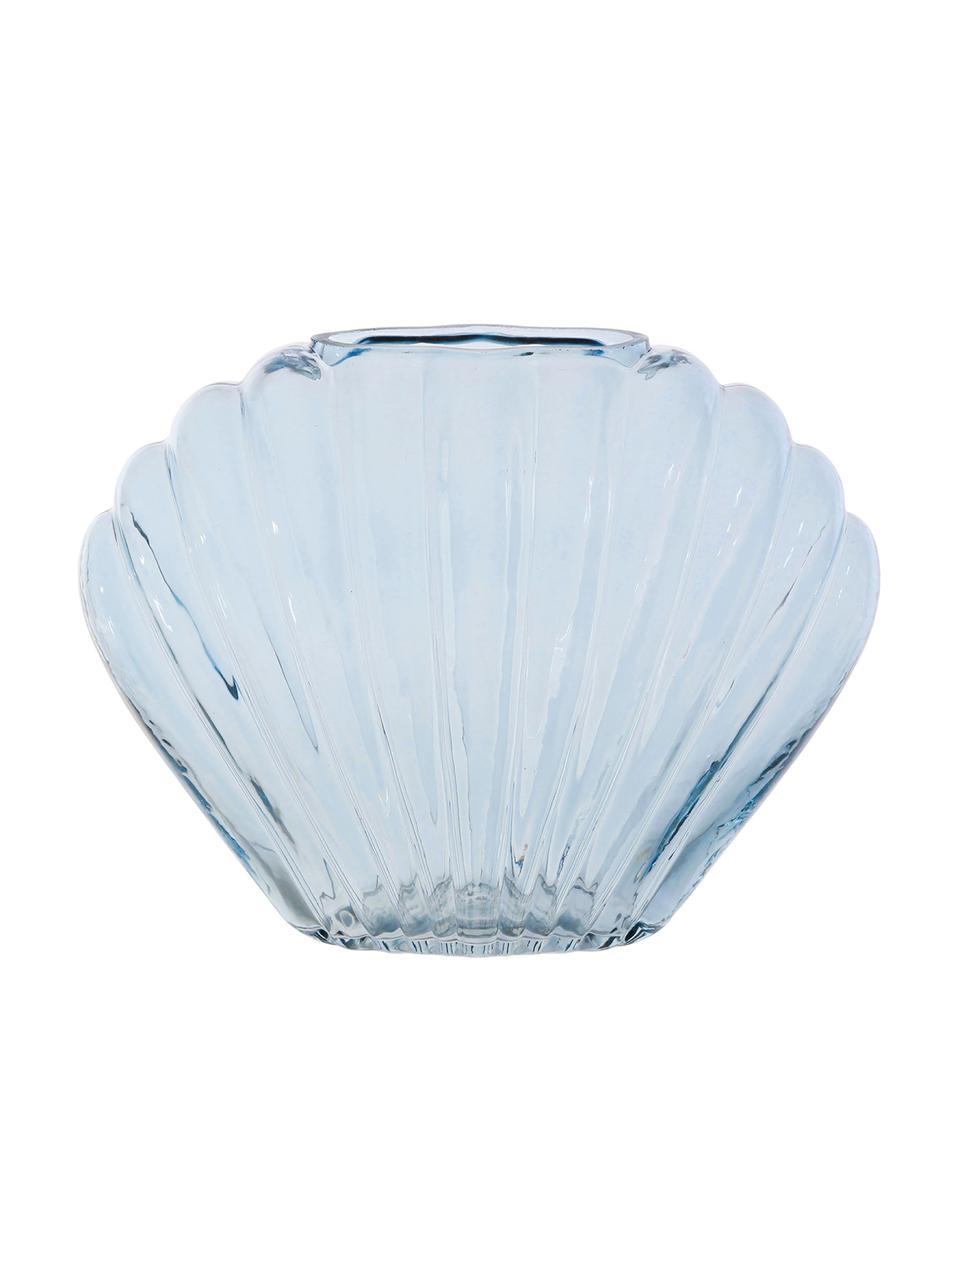 Glazen vaas Leucie in blauw, Glas, Blauw, transparant, B 28 x H 22 cm